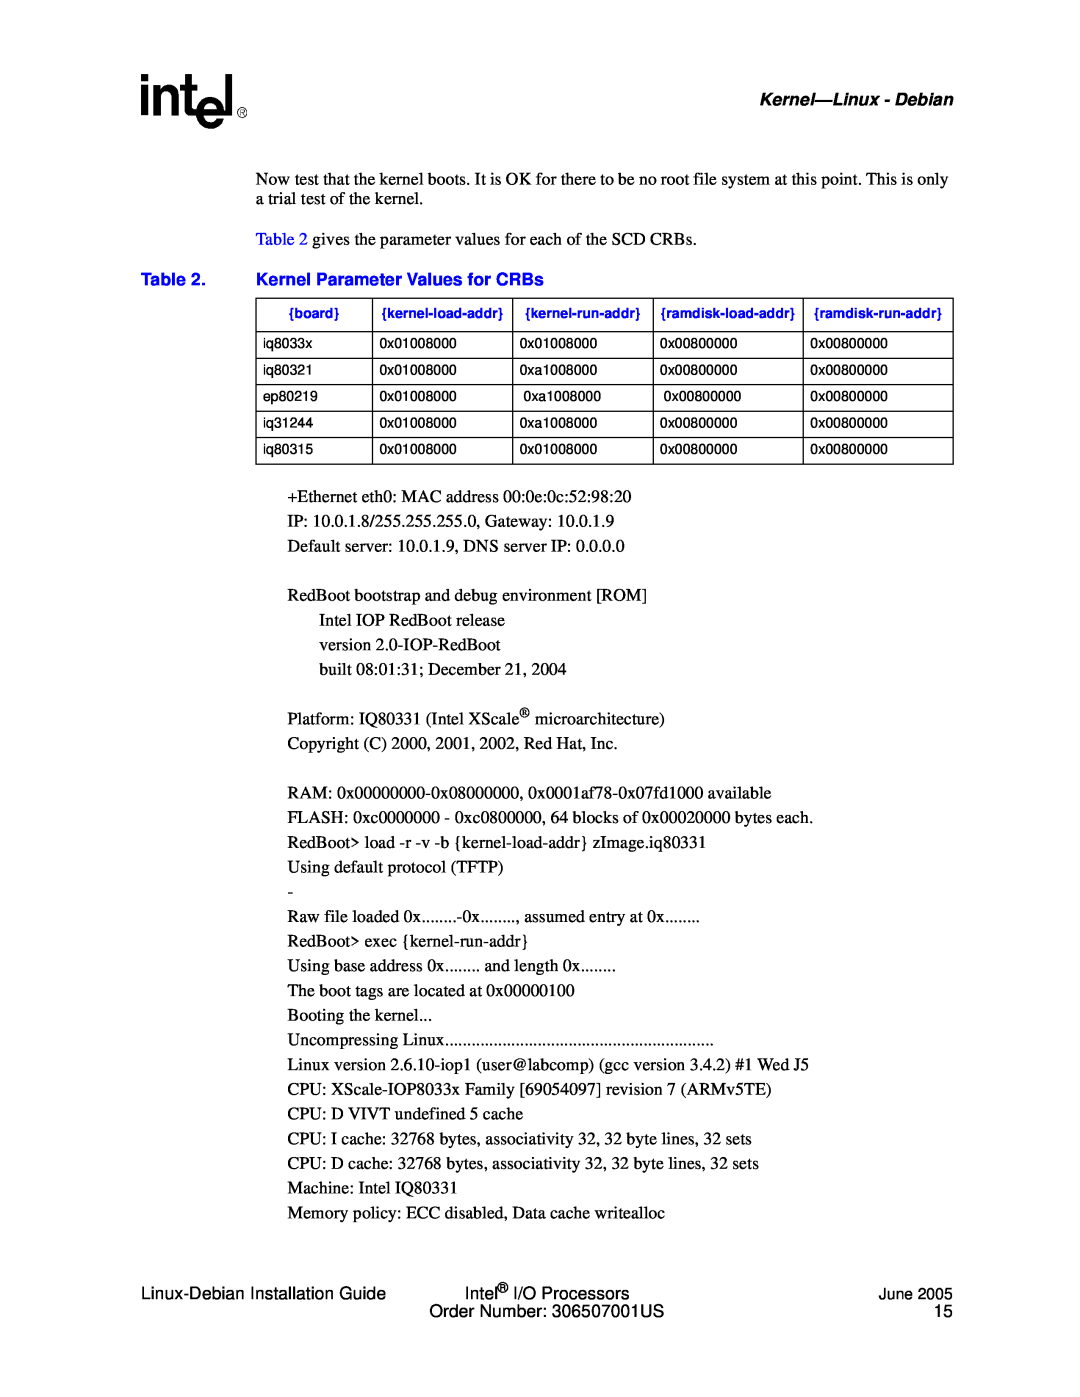 Intel I/O Processor manual Kernel—Linux- Debian, Kernel Parameter Values for CRBs, Table 